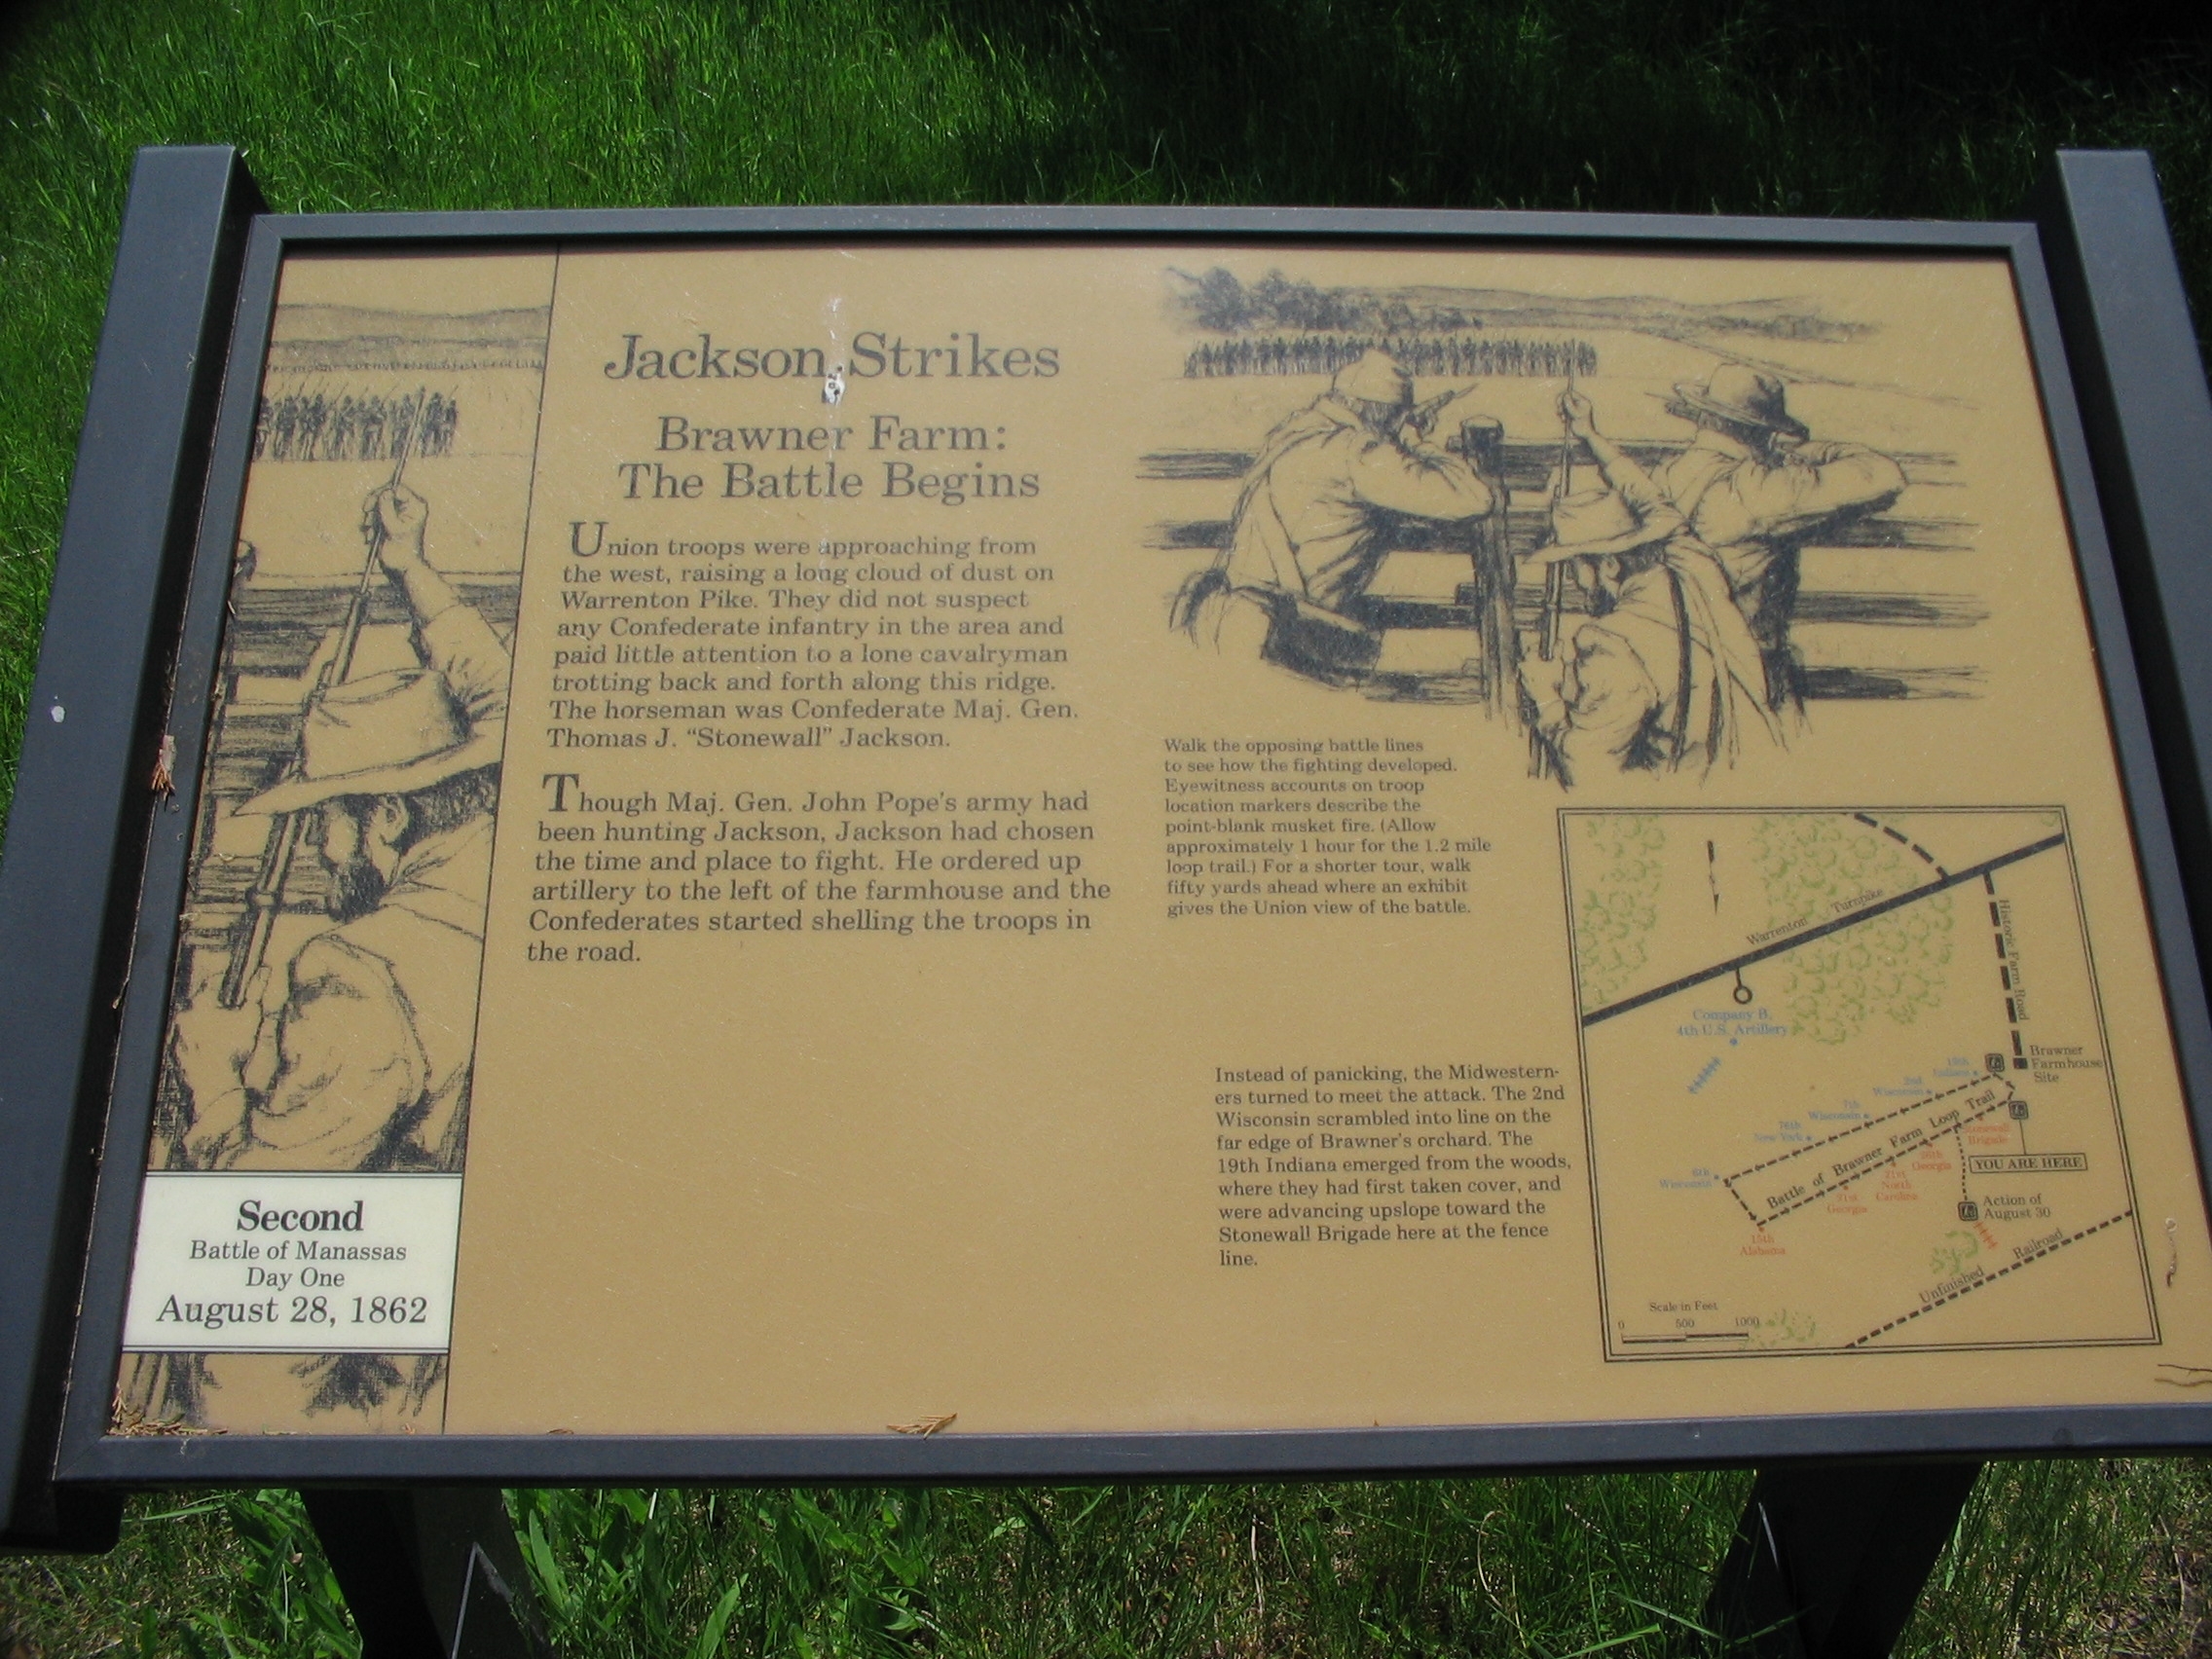 Jackson Strikes Marker